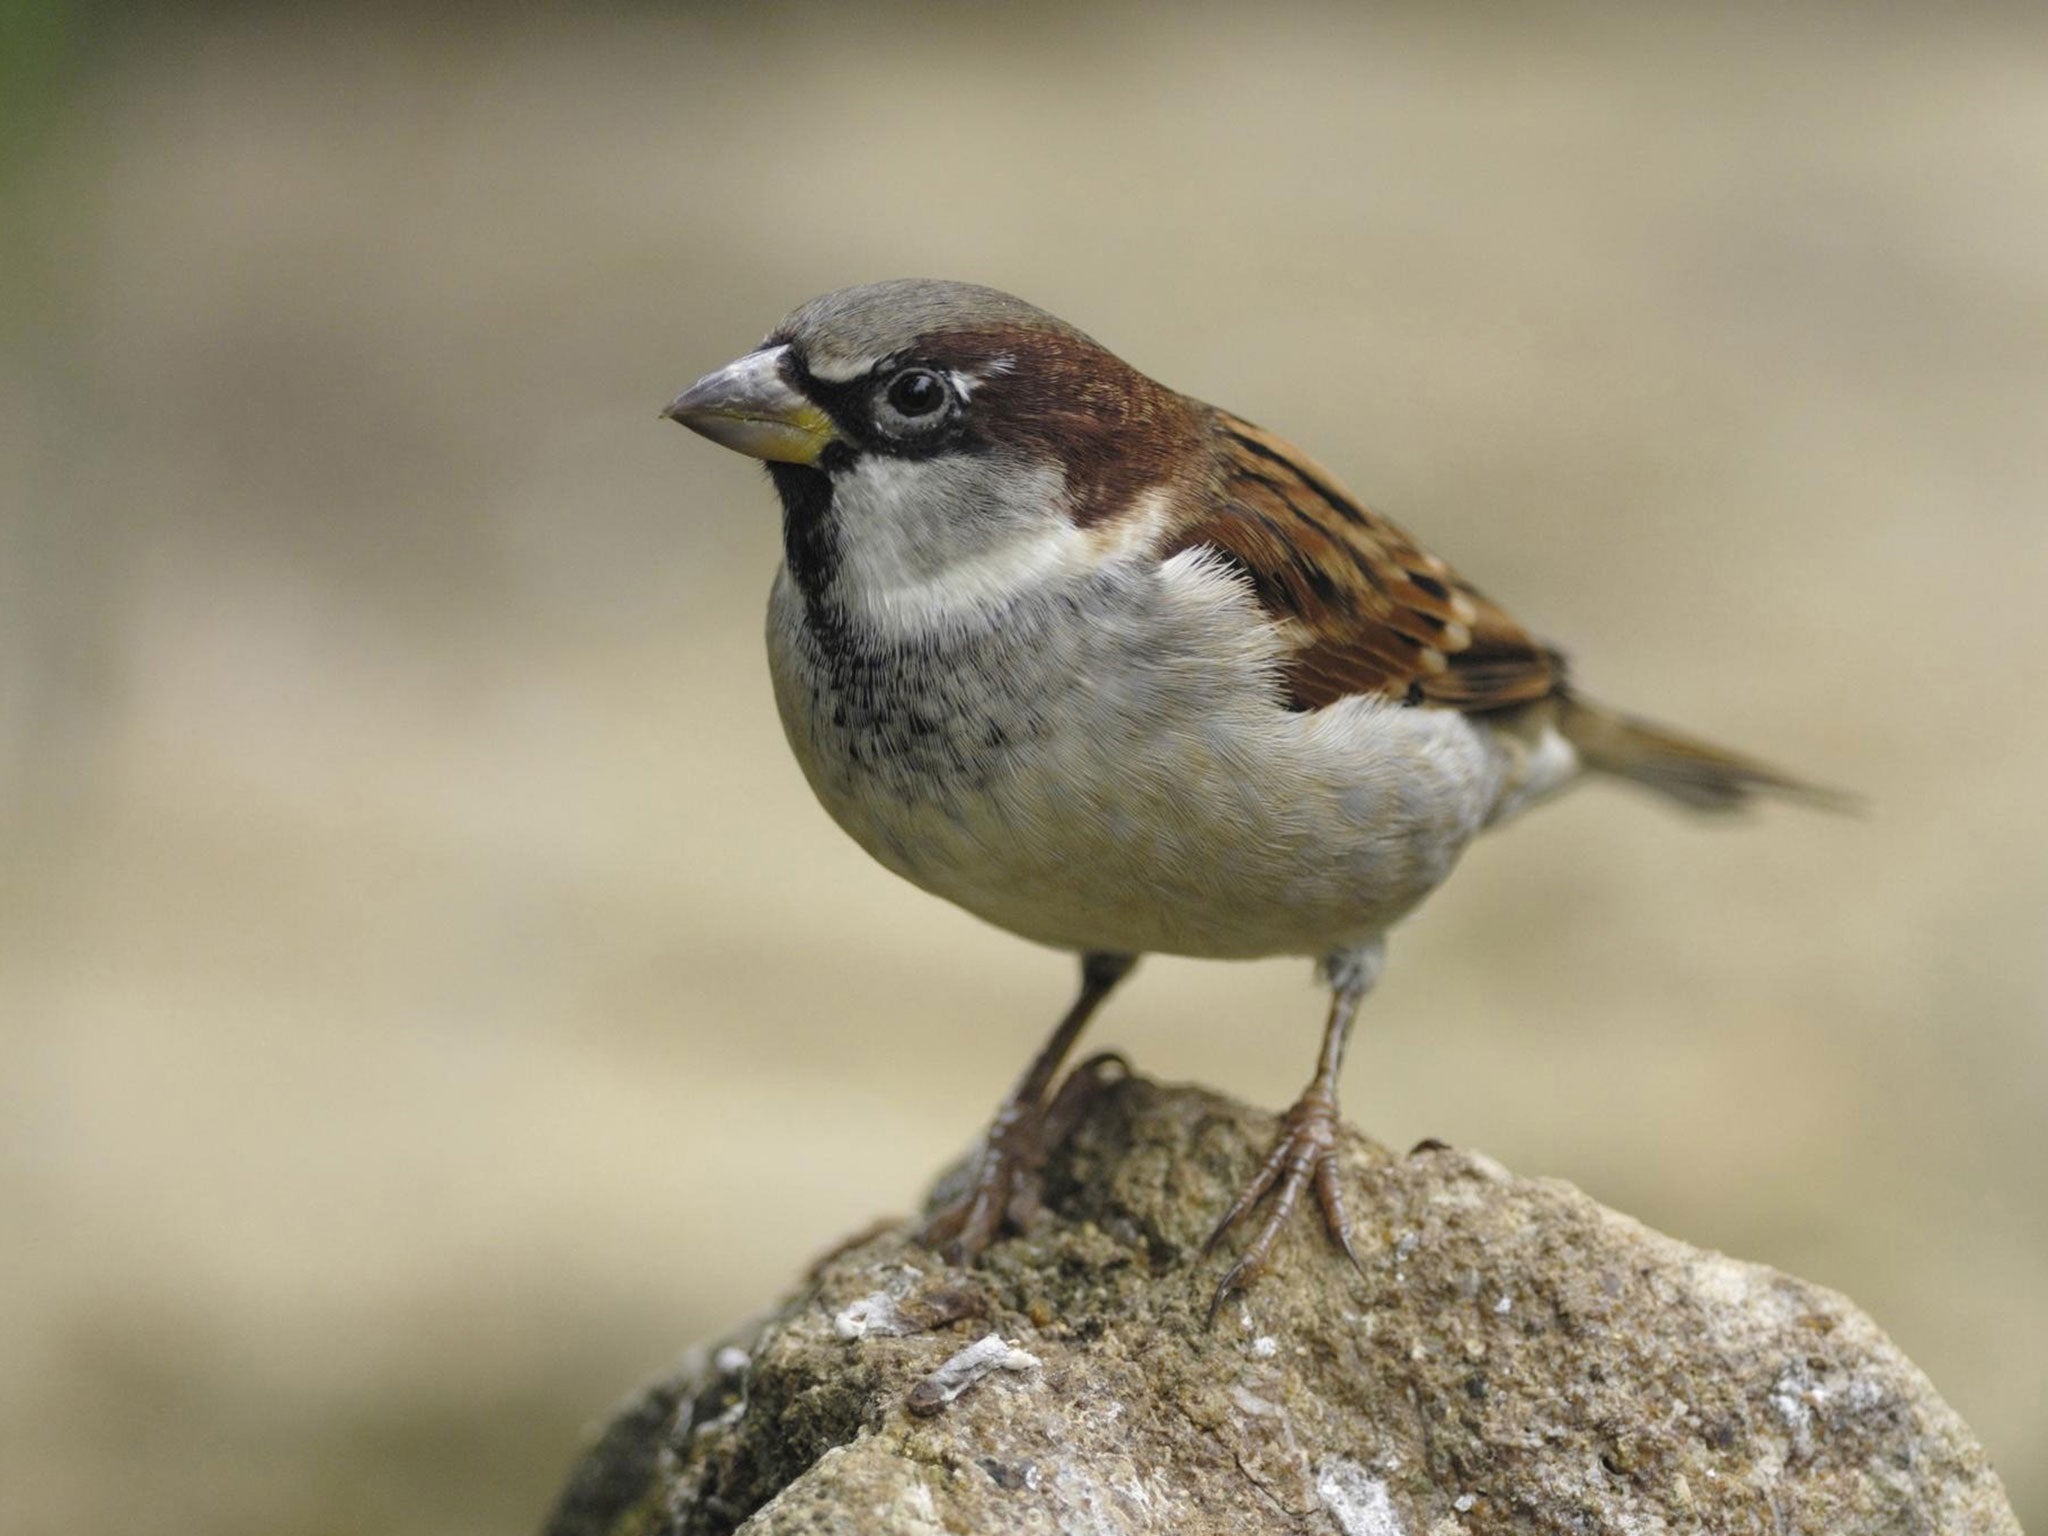 Recent weather could affect bird behaviour in gardens